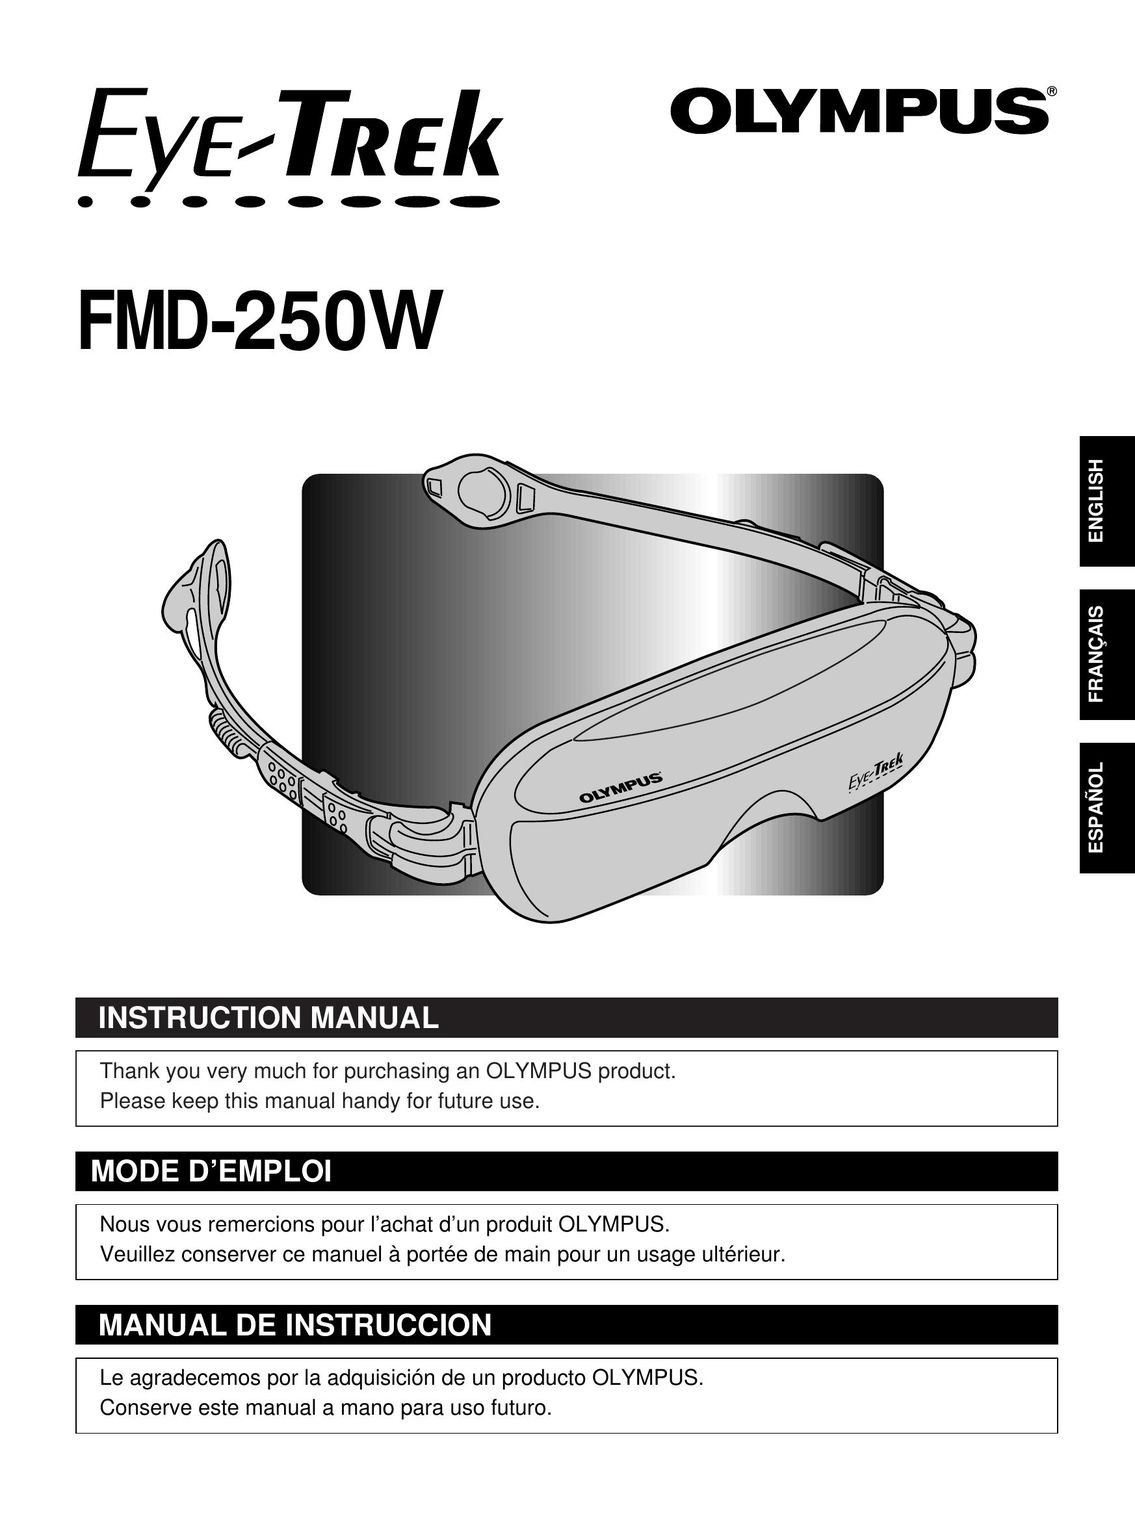 Olympus FMD-250W Video Eyeware User Manual